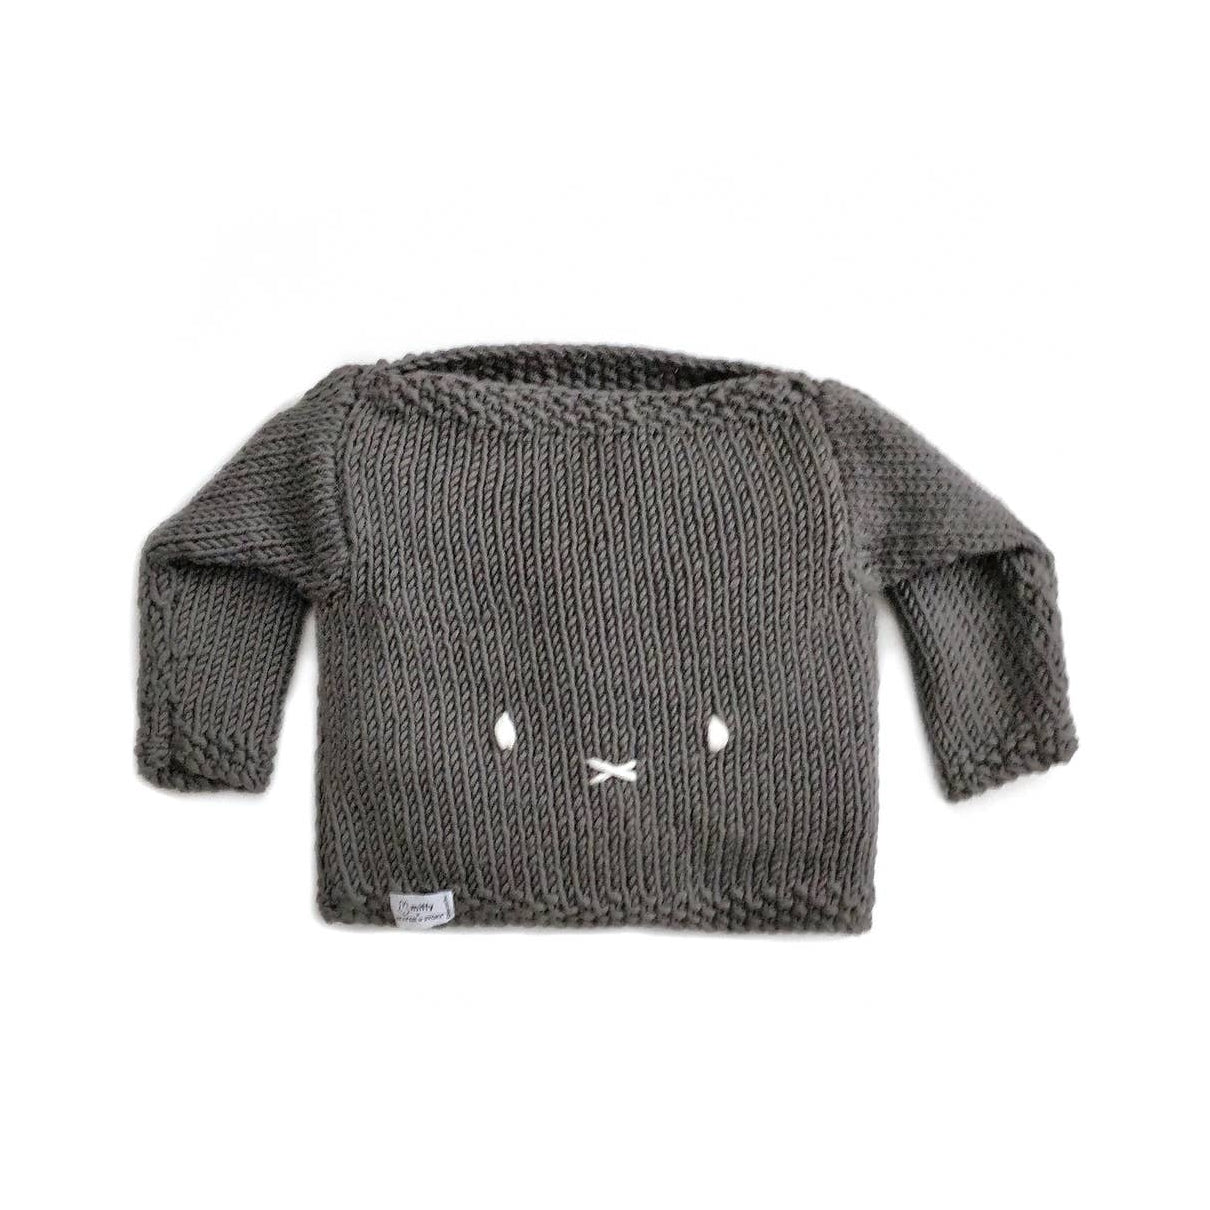 Pebble Grey Miffy Sweater Knitting Kit